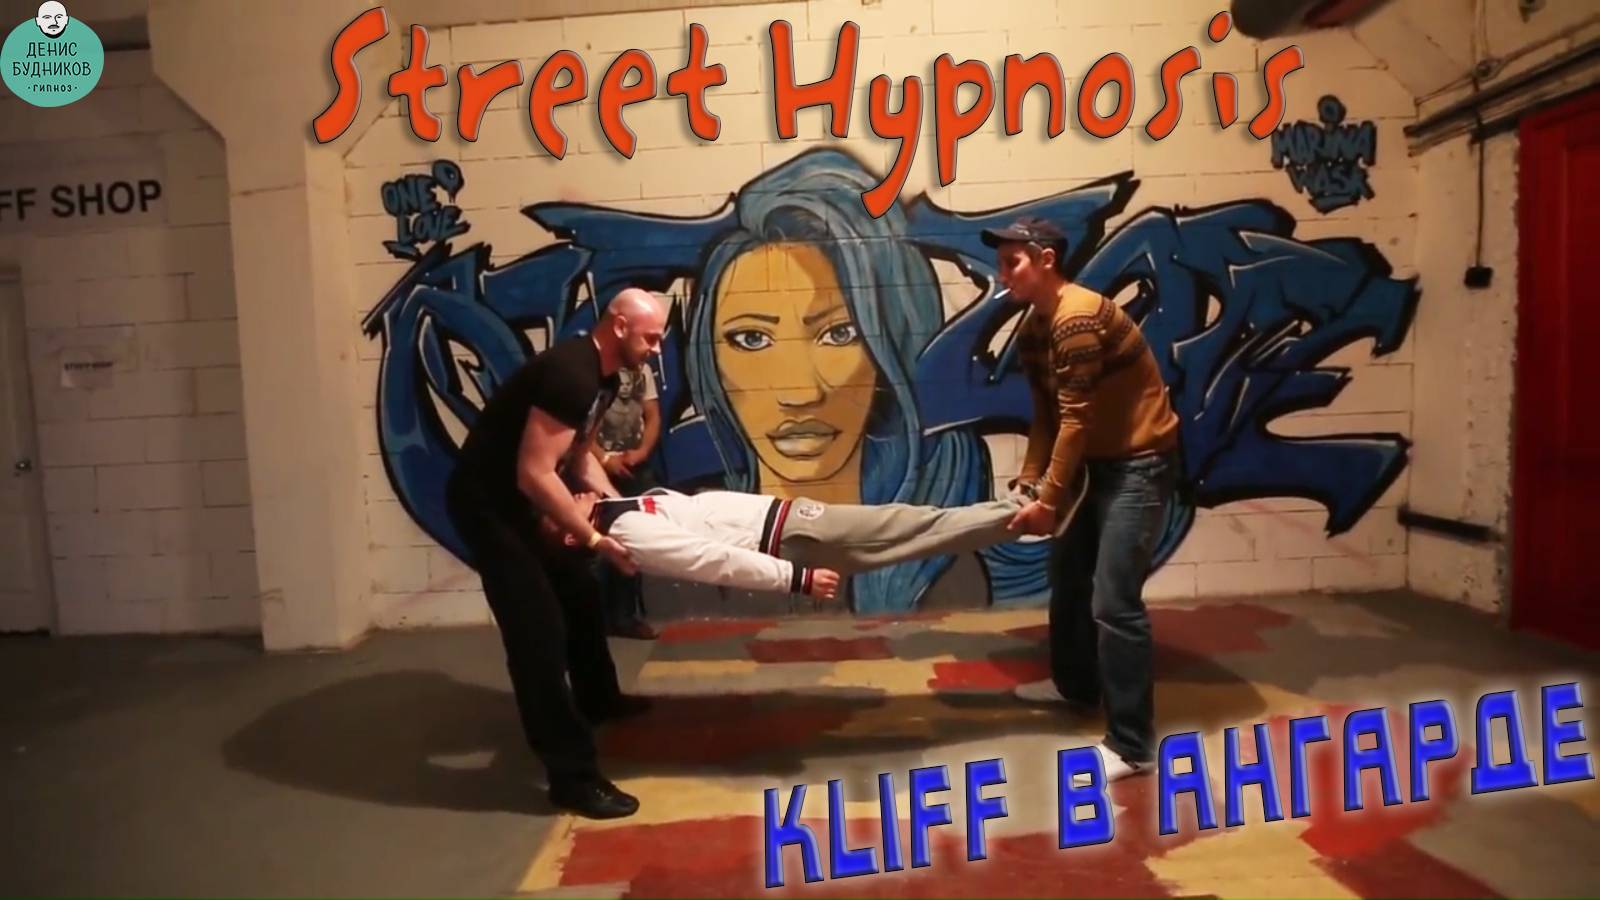 Street Show Hypnosis - Kliff в Ангарте (Уличный Гипноз)